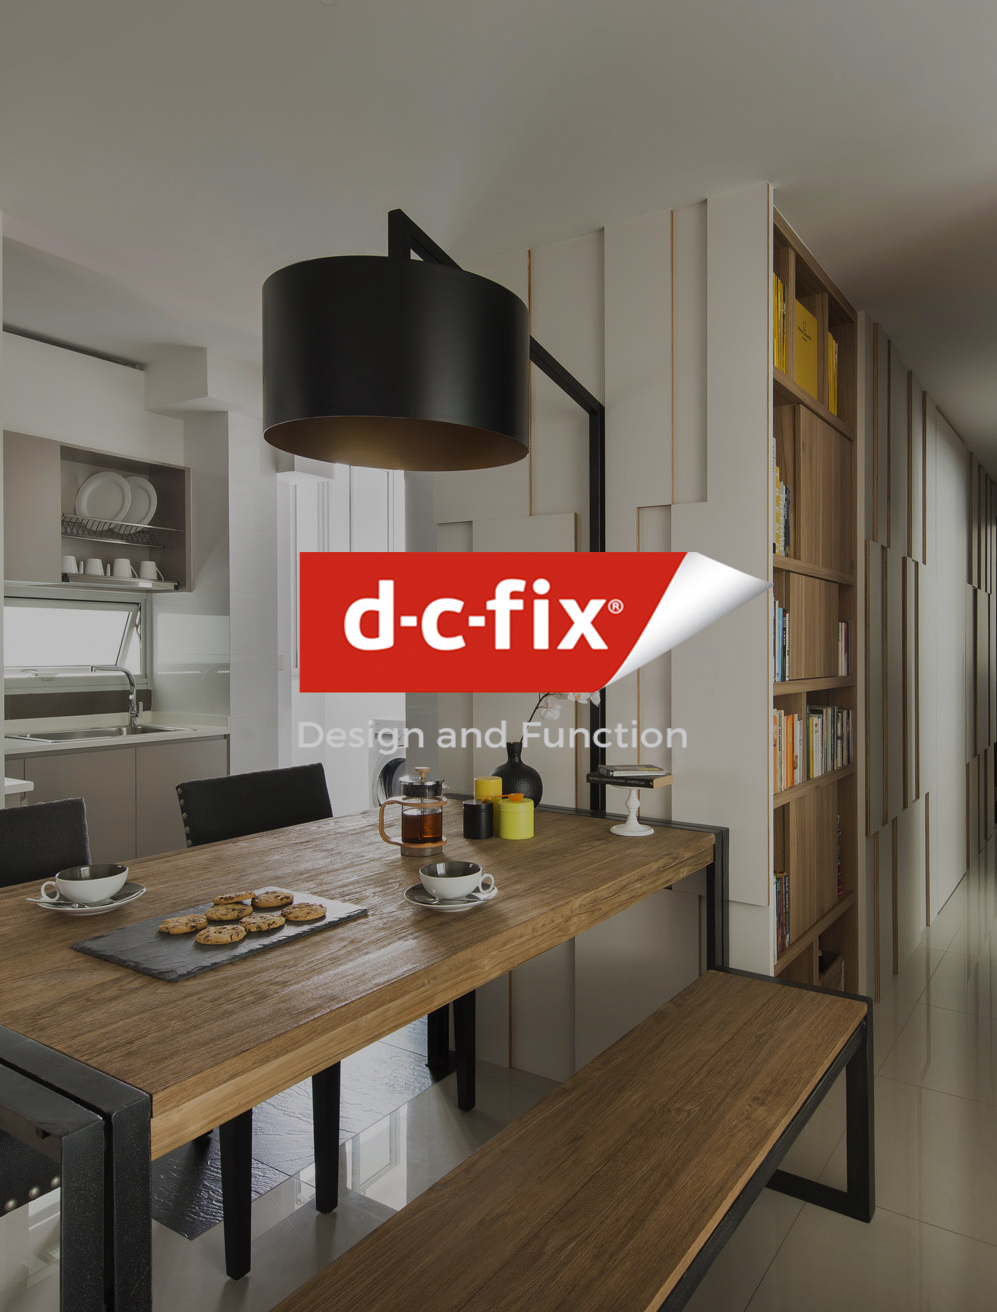 DC Fix - brand and design